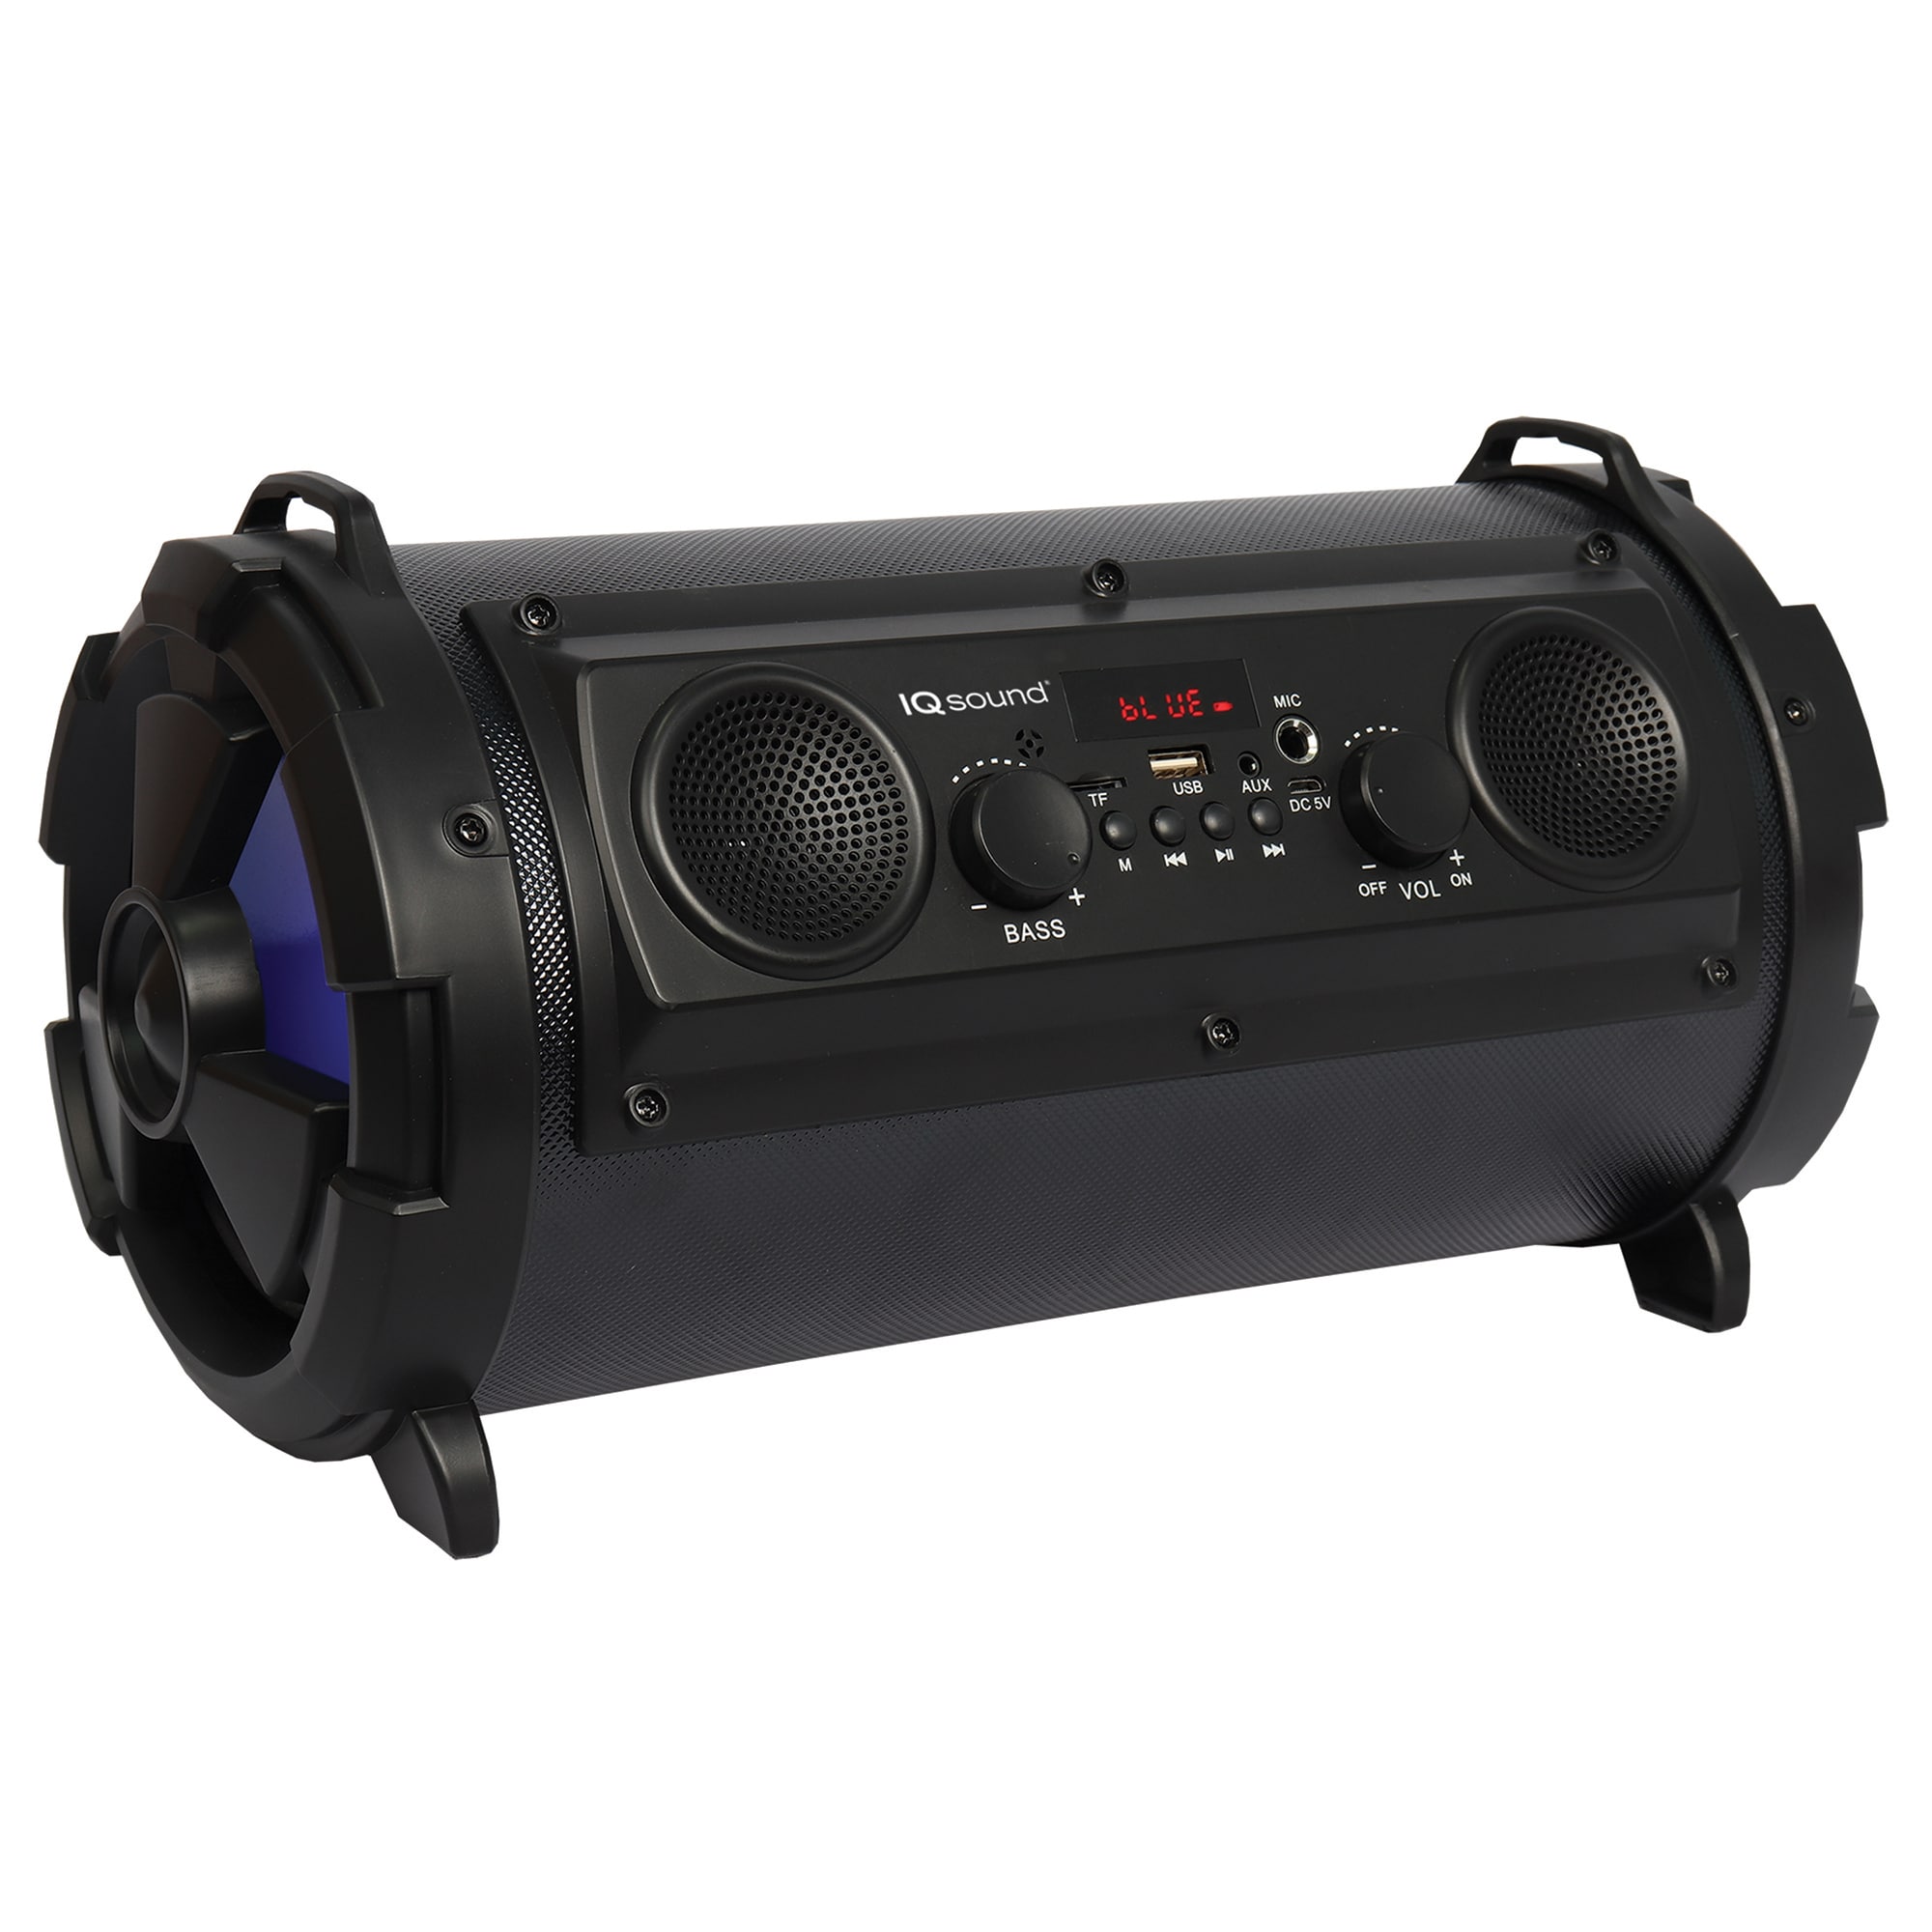 IQ Sound IQ-1525BT Wireless Bluetooth Speaker (Black) in the